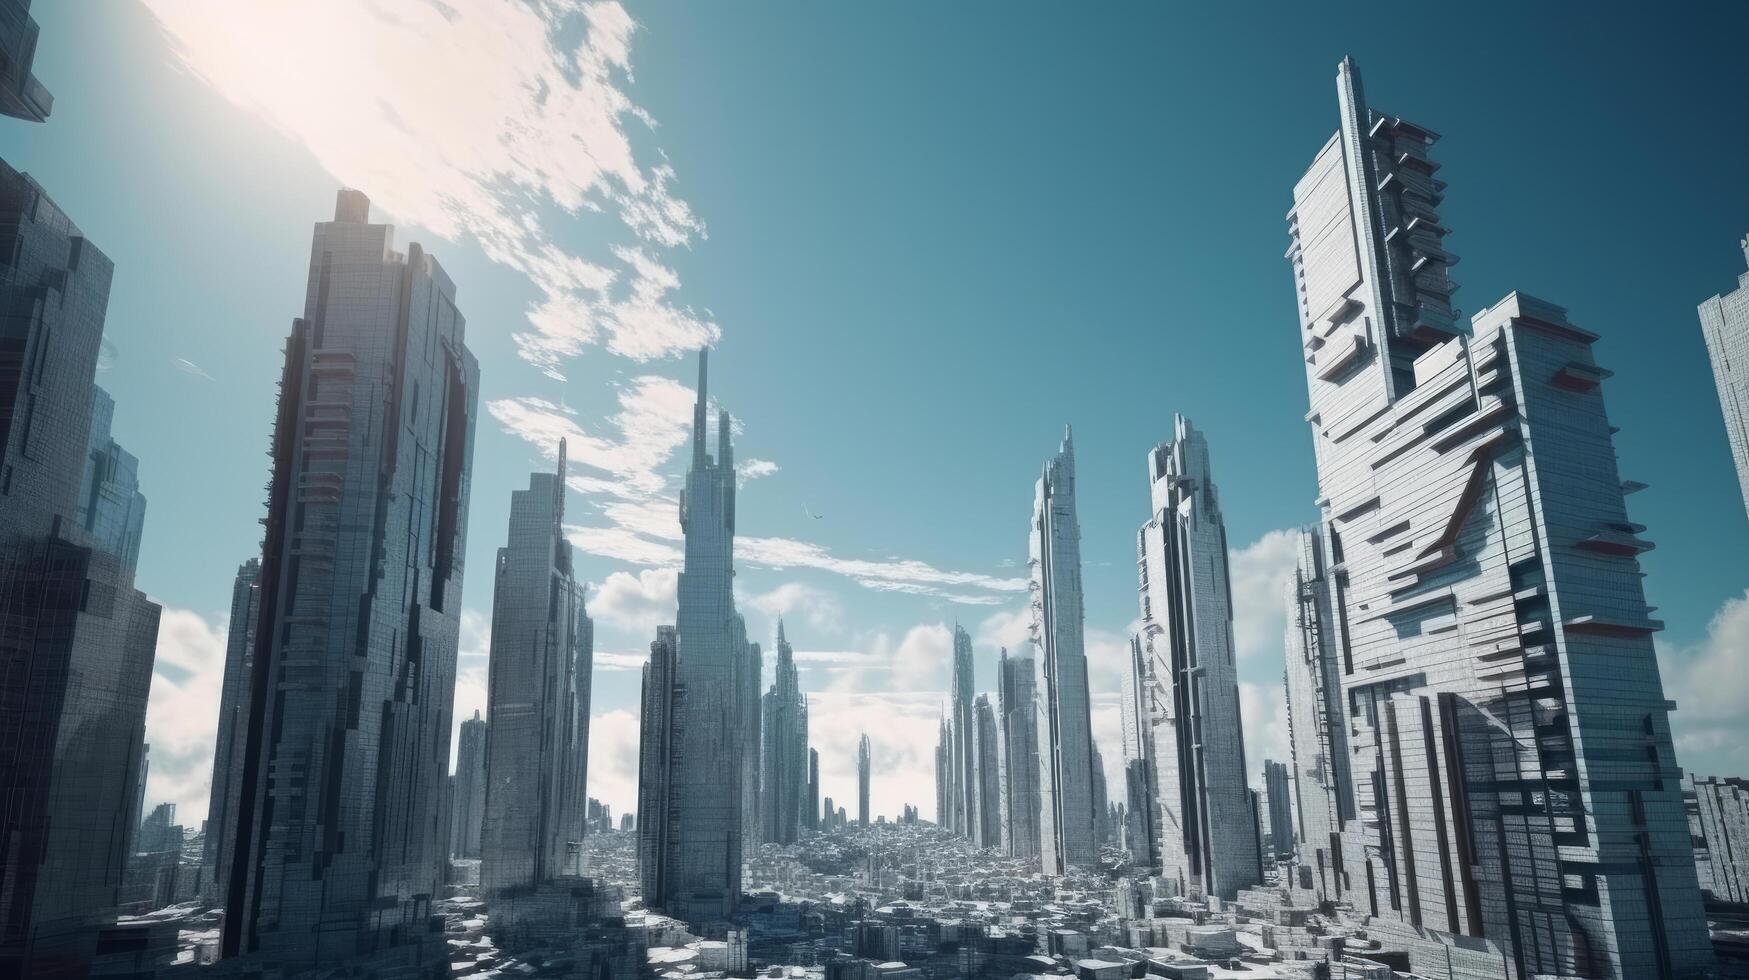 Futuristic city background. Illustration photo